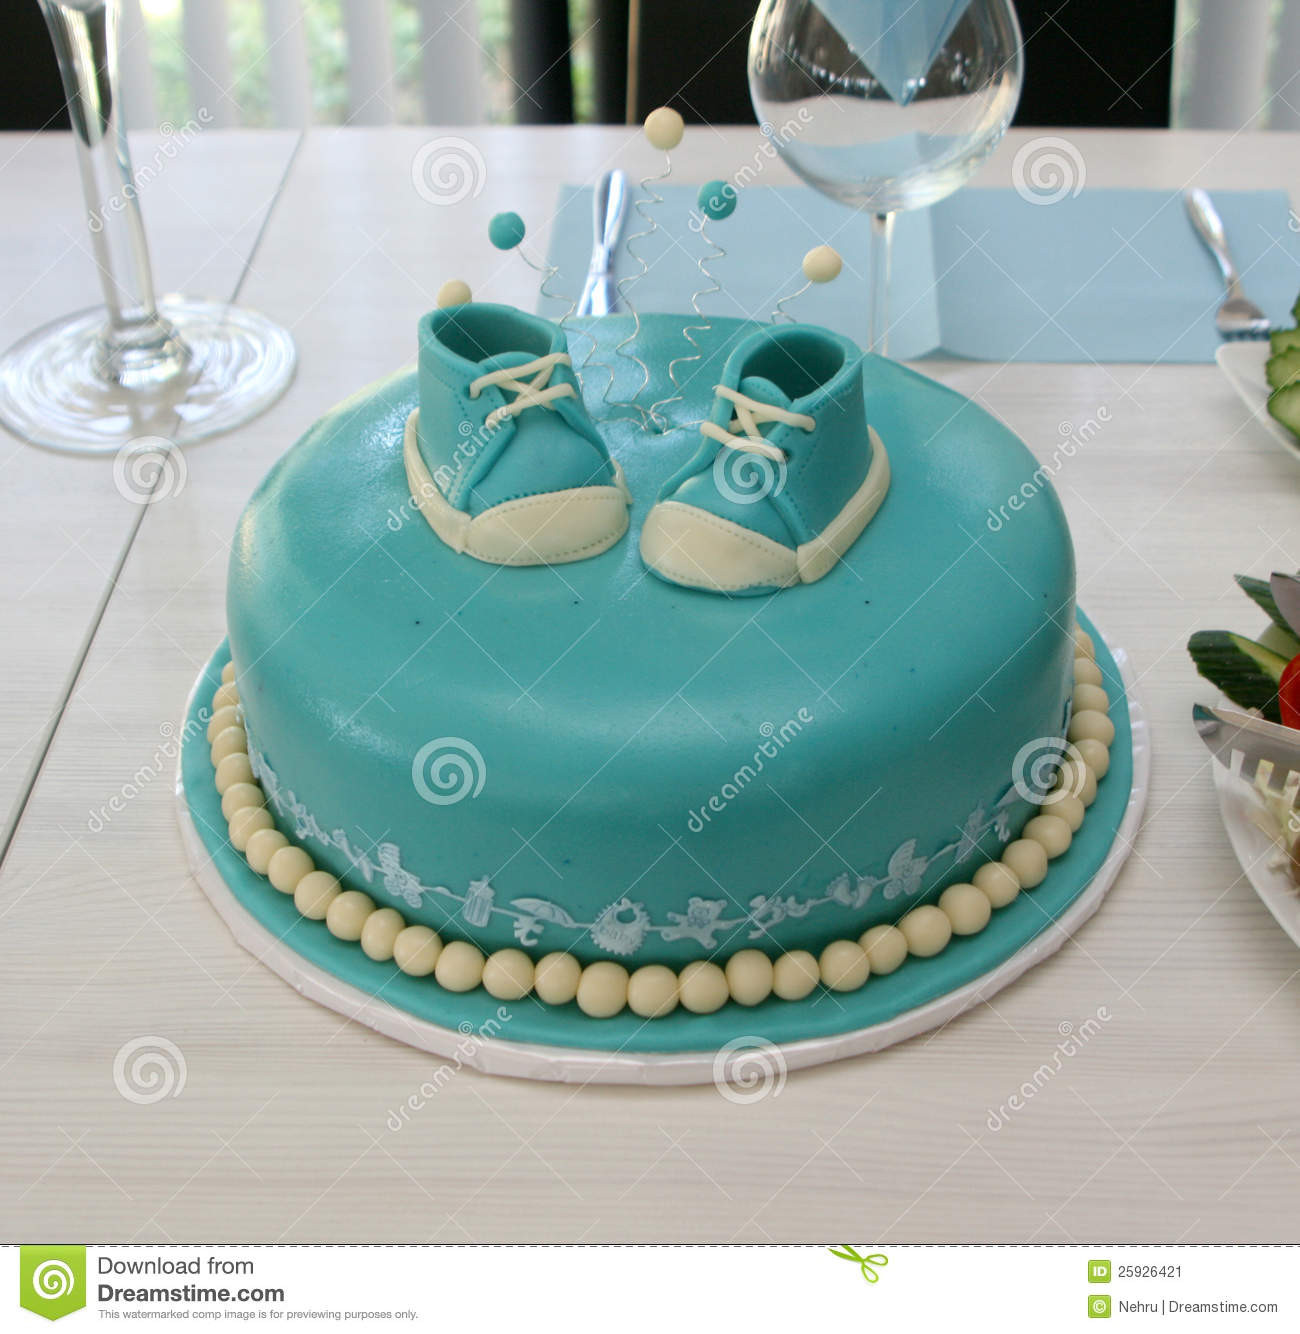 Baby Boys Birthday Cake
 Baby boy birthday cake stock image Image of celebration